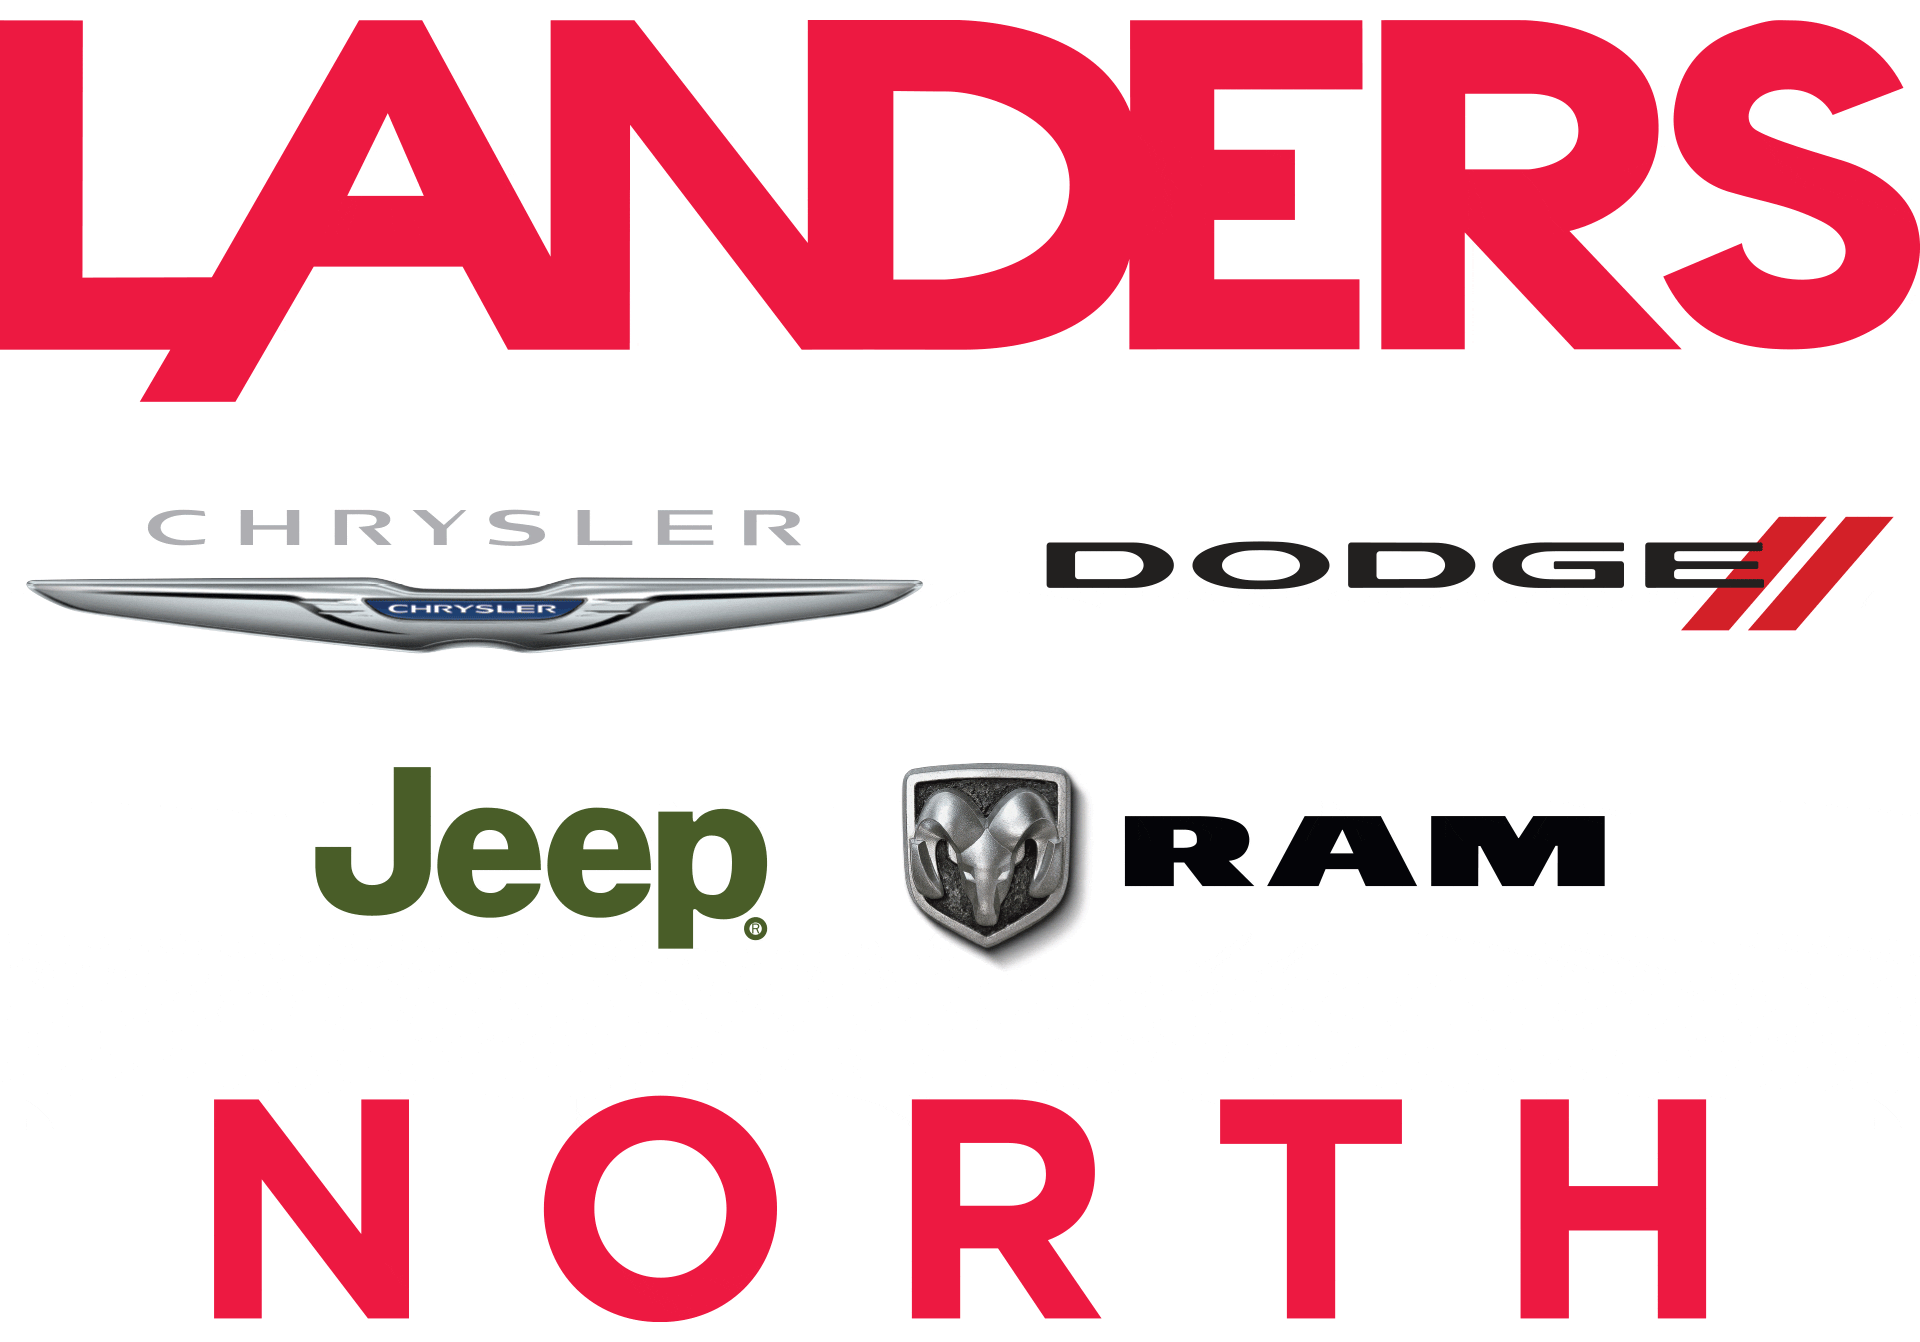 Landers Chrysler Dodge Jeep Ram North